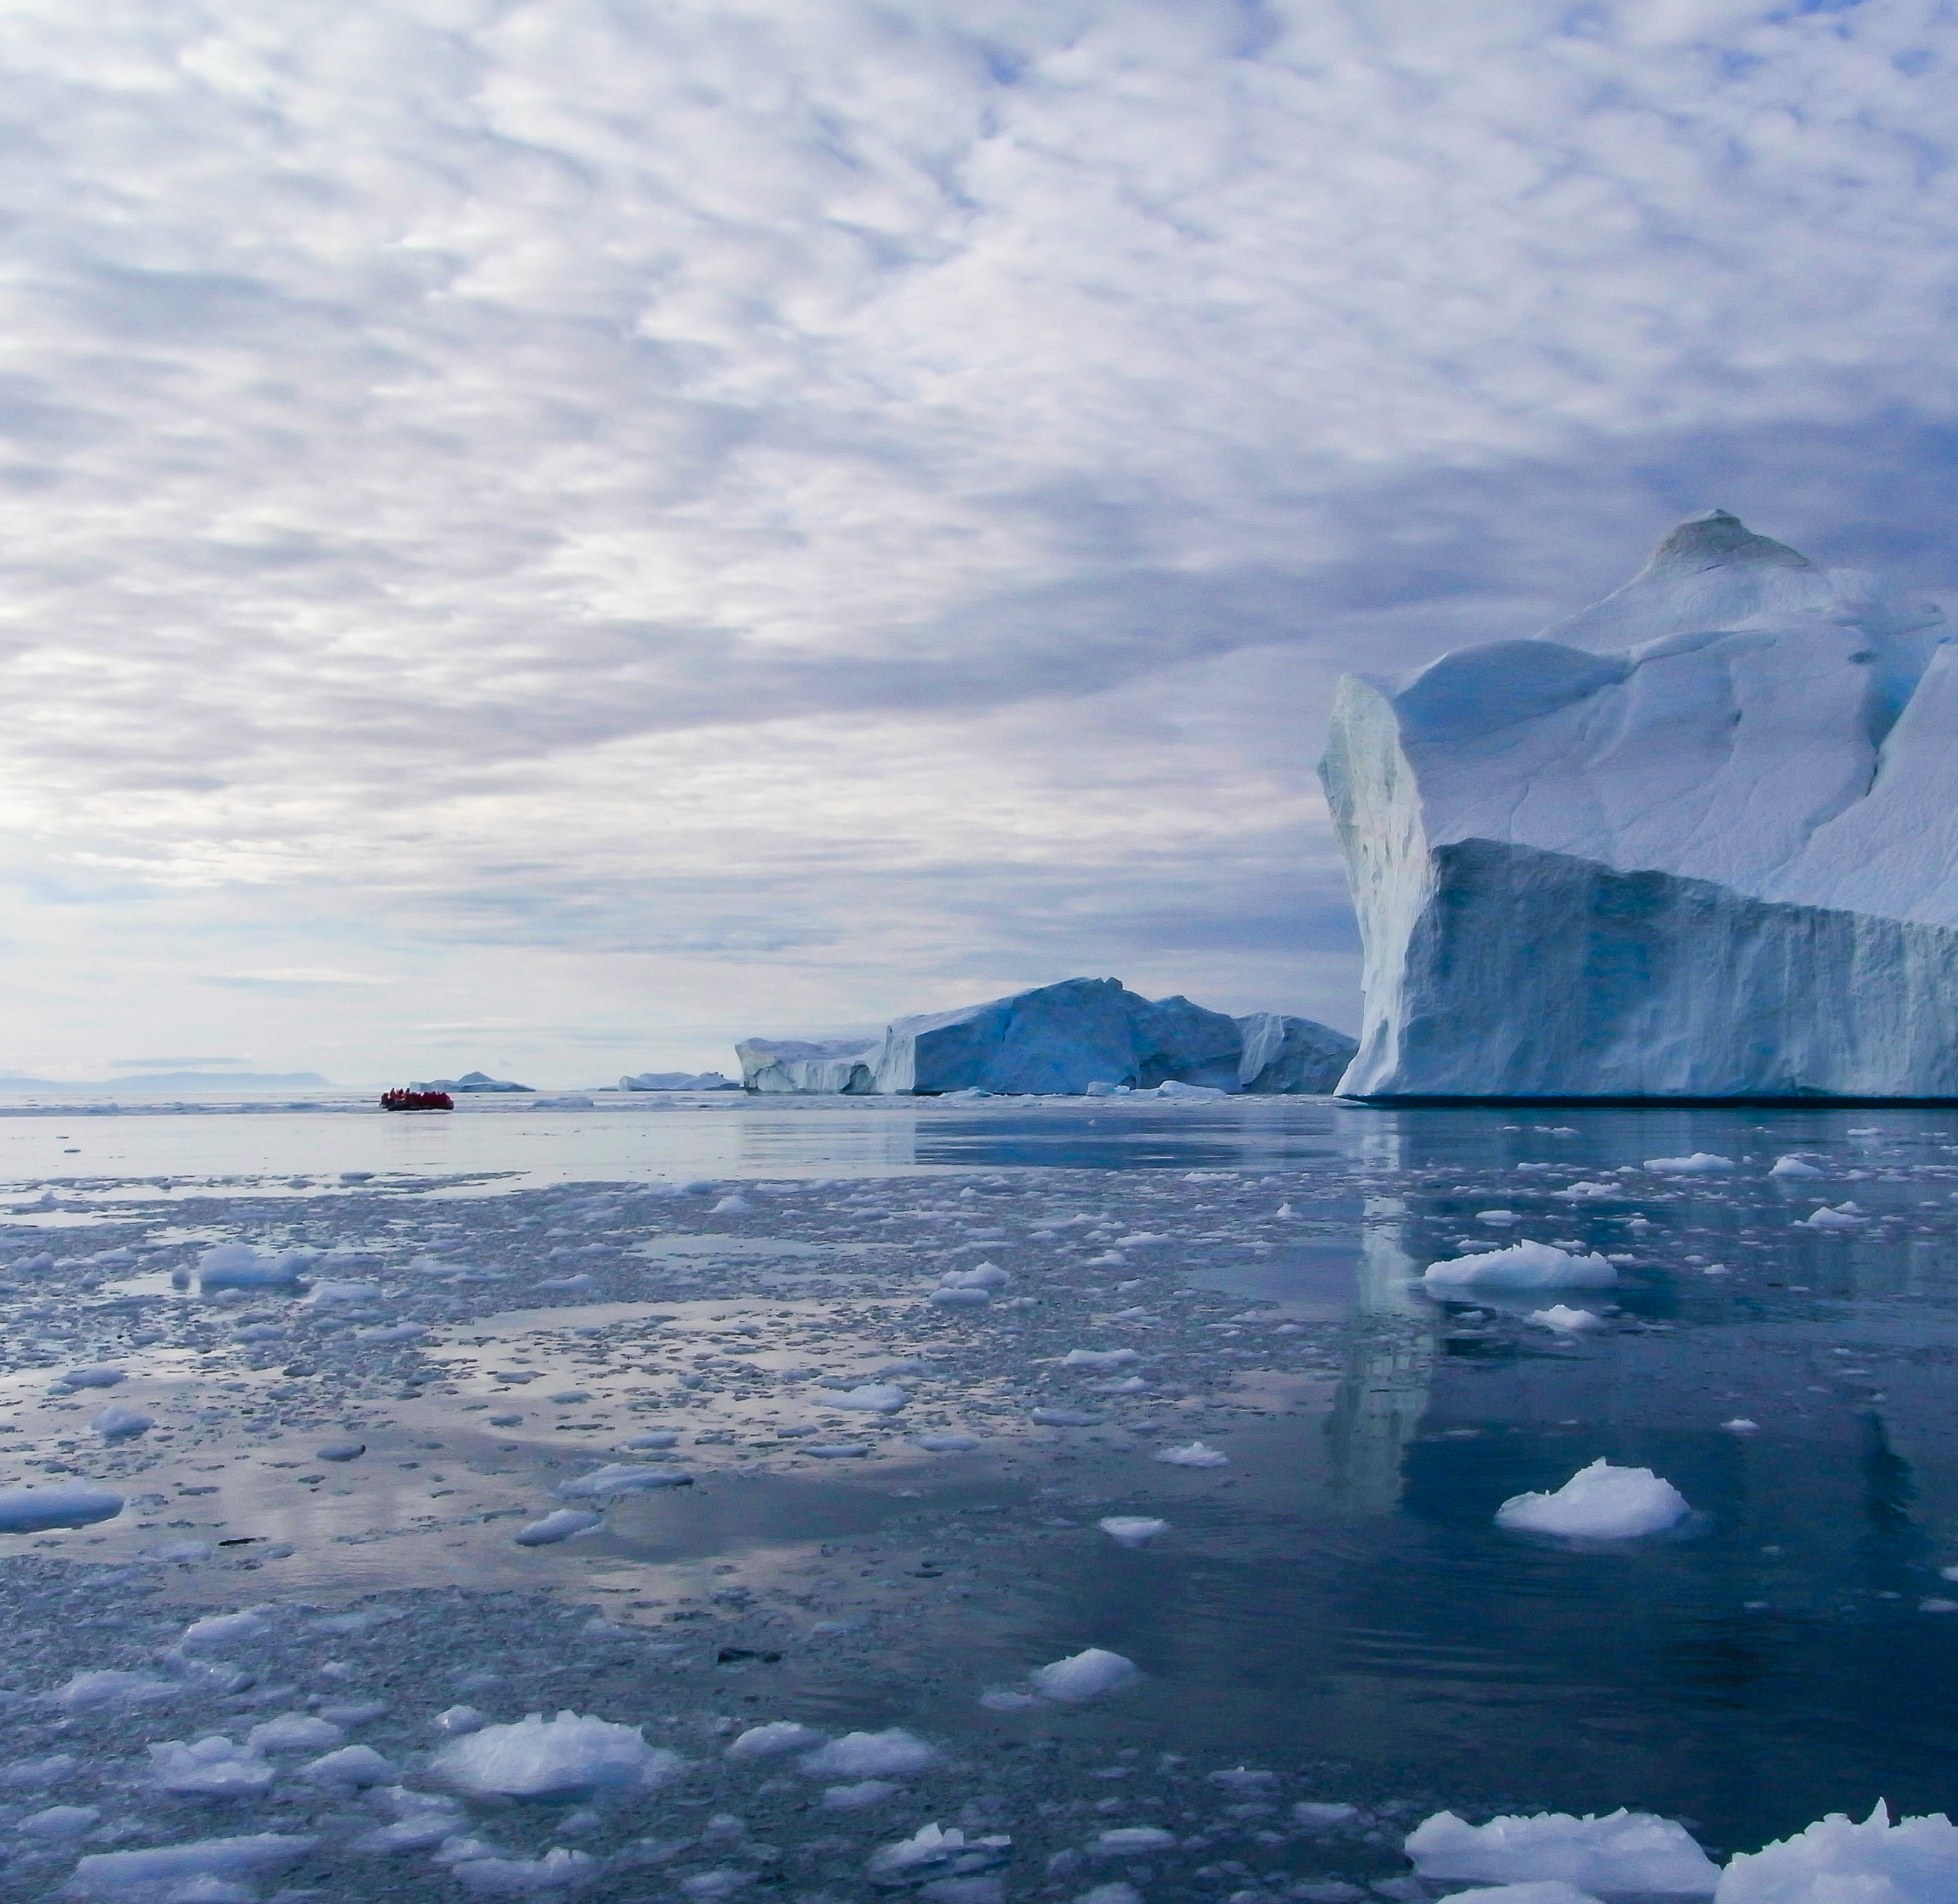 Arctic ocean with icebergs.